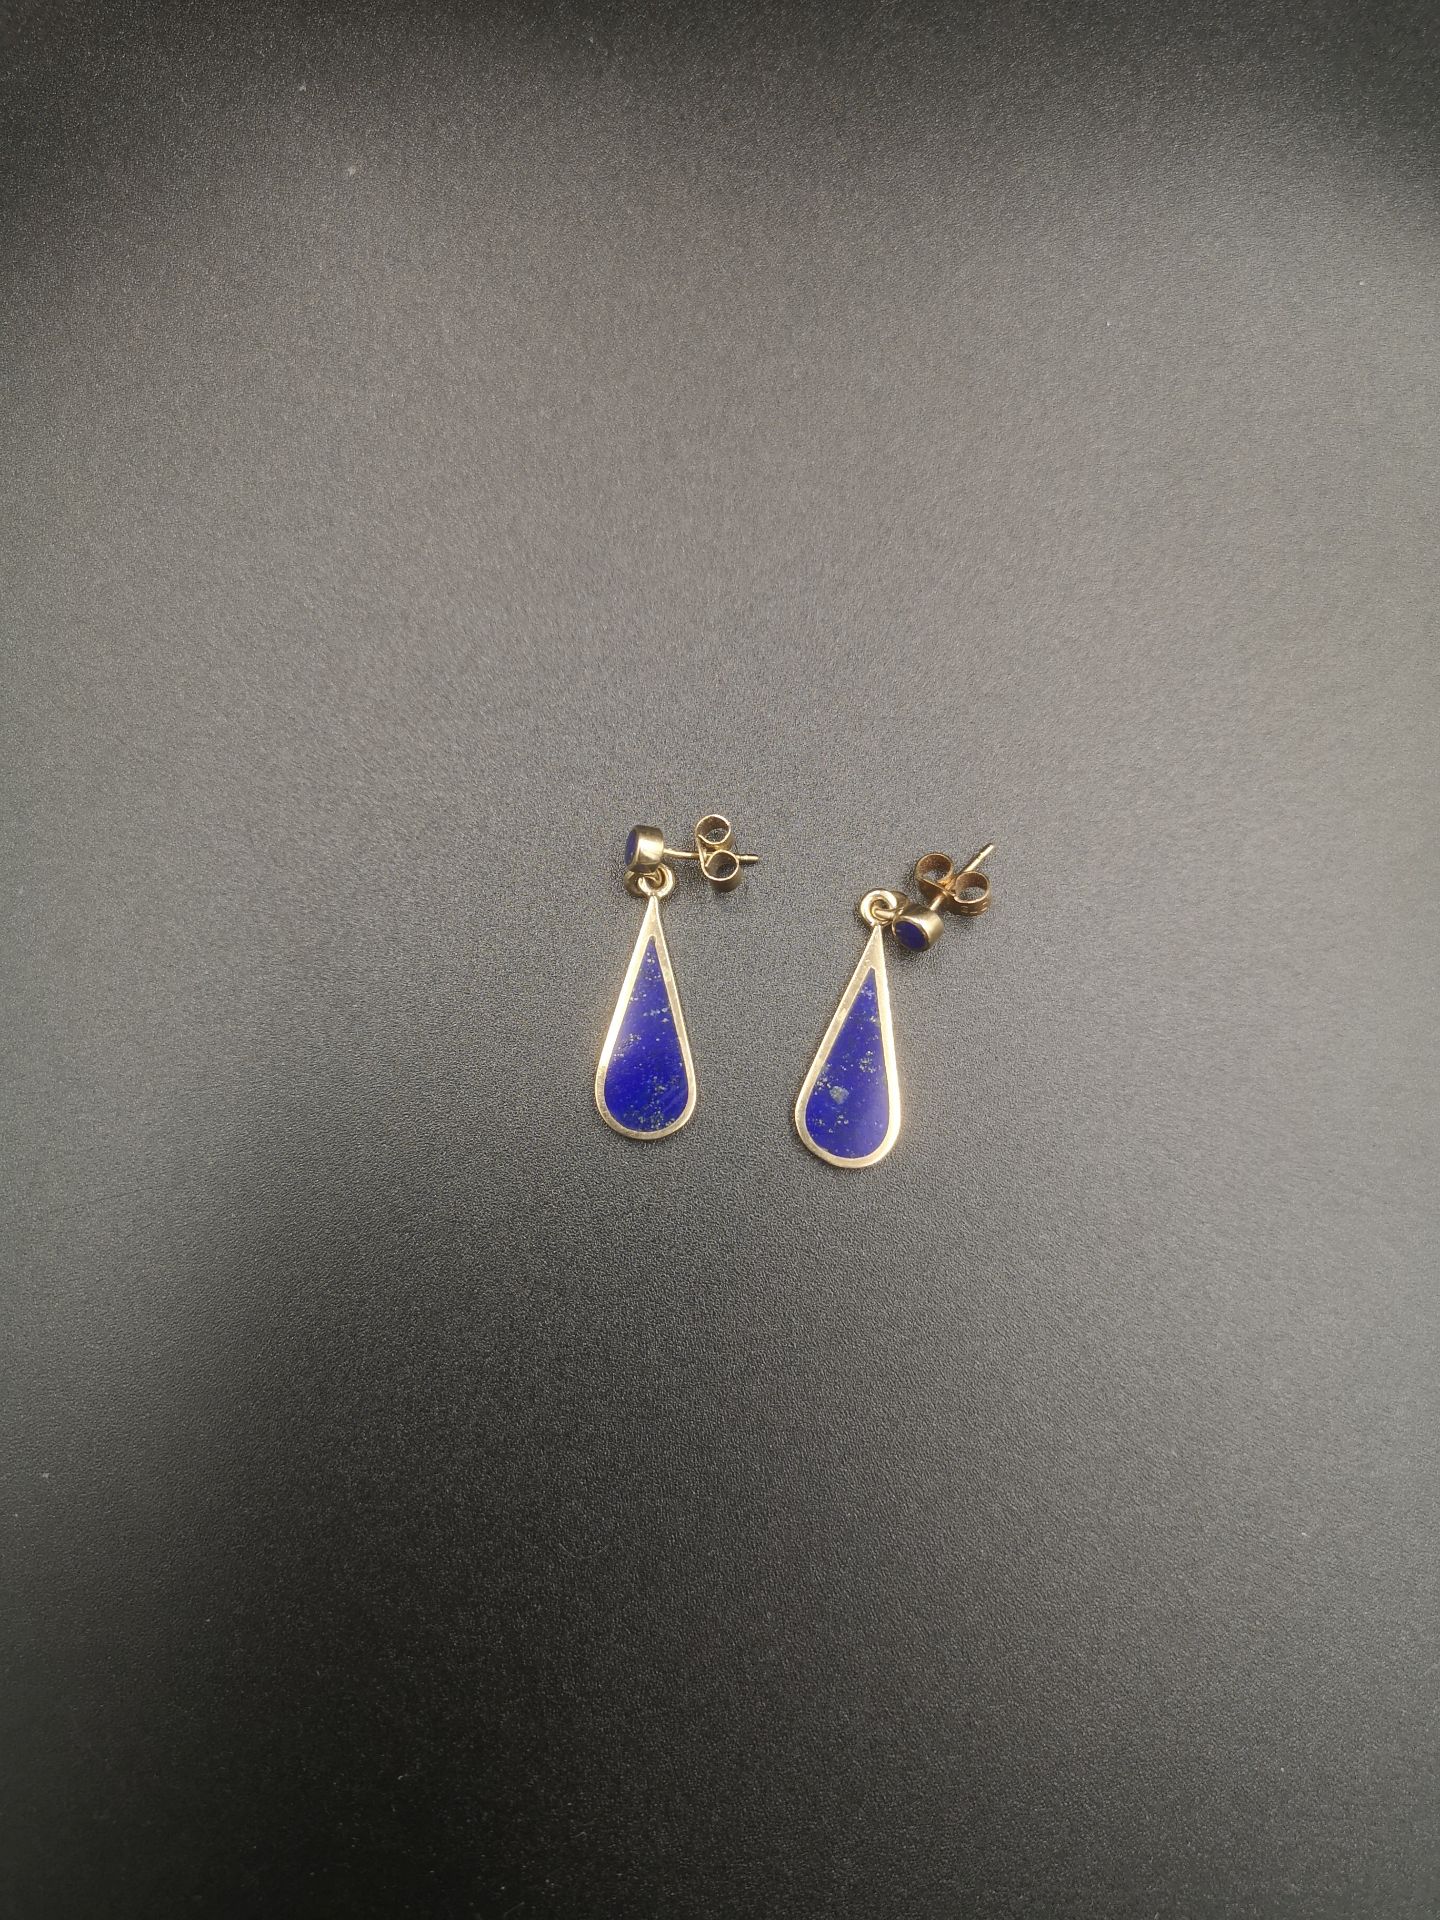 pair of 9ct gold drop earrings - Image 5 of 5